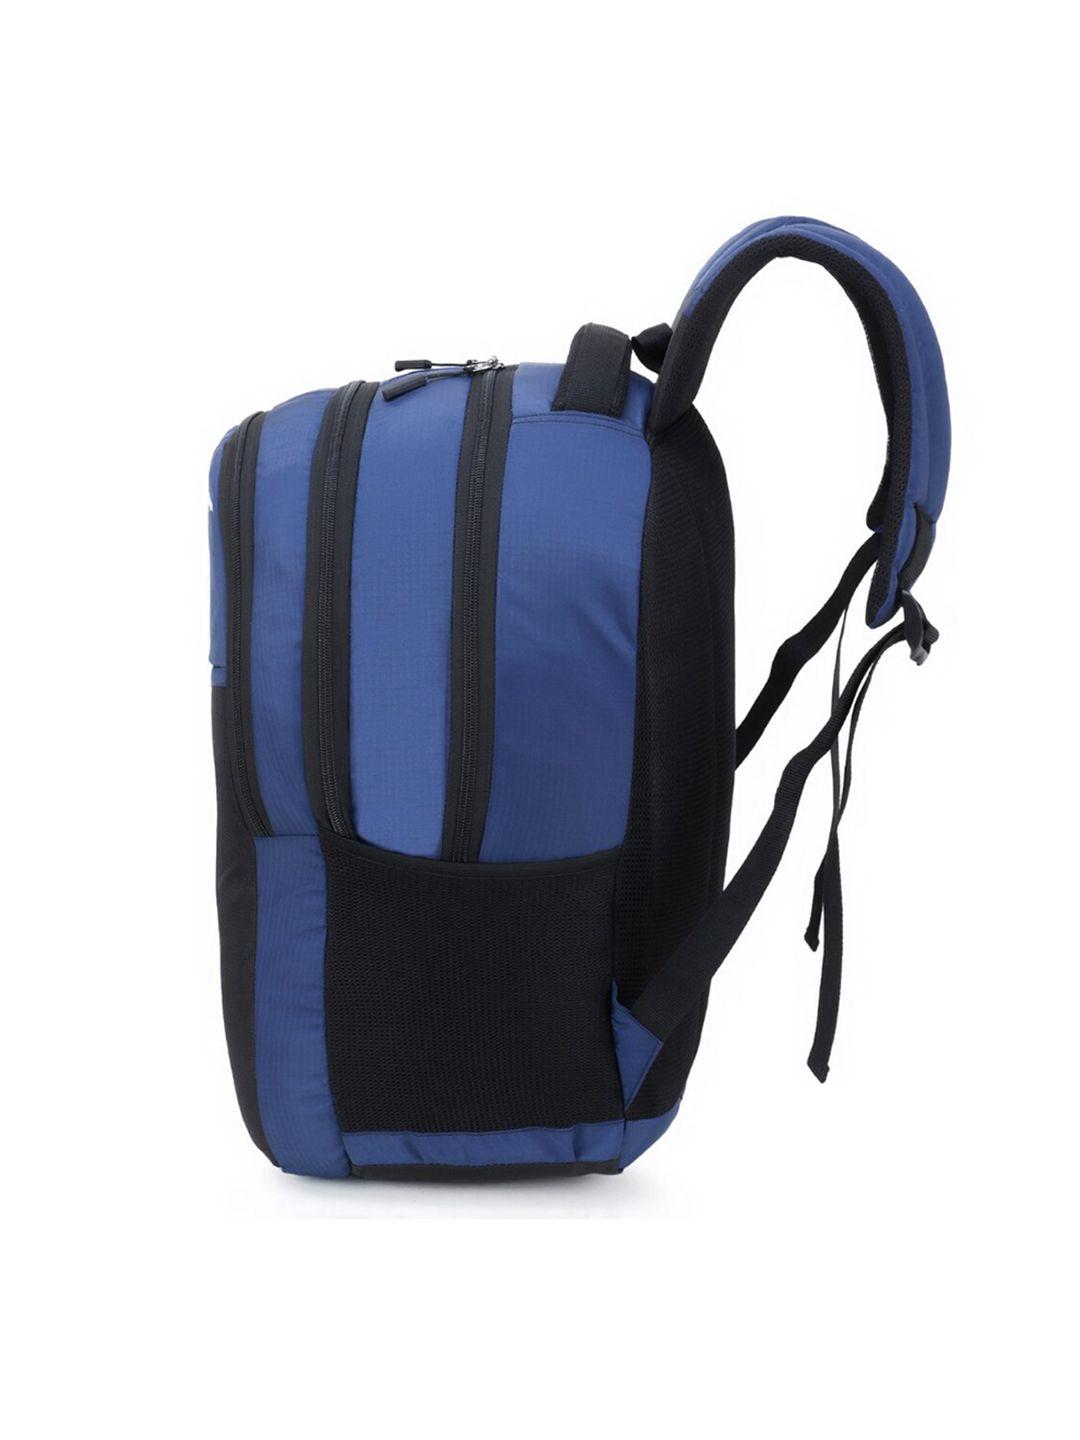 lookmuster unisex blue & black colourblocked backpack